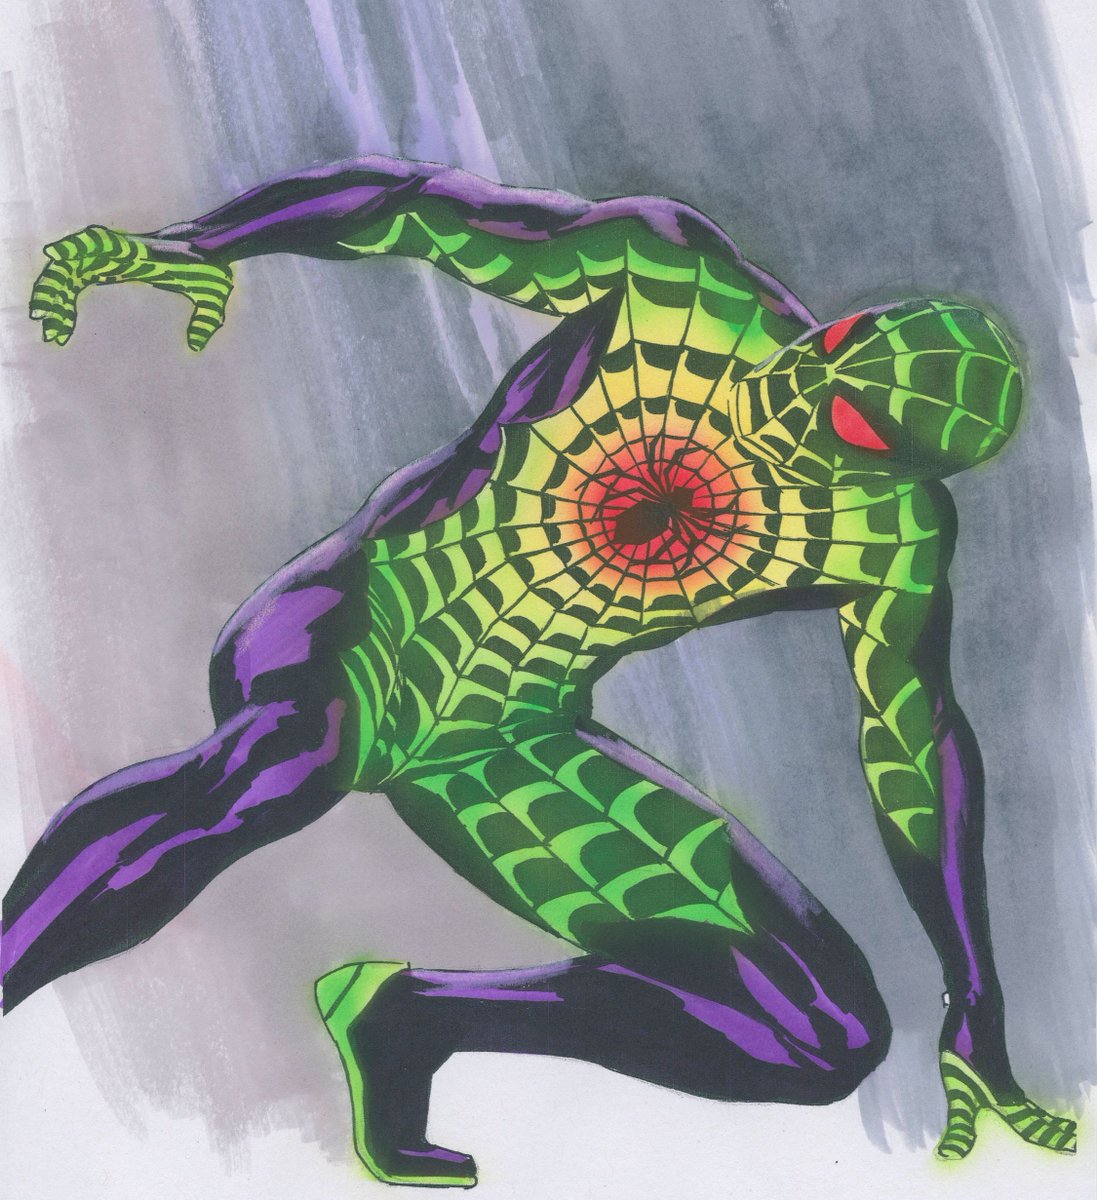 RT @thealexrossart: Spider-Man (Playstation Design)   #spiderman #ps4 #videogameart #comicartist https://t.co/A6HegKDJI6